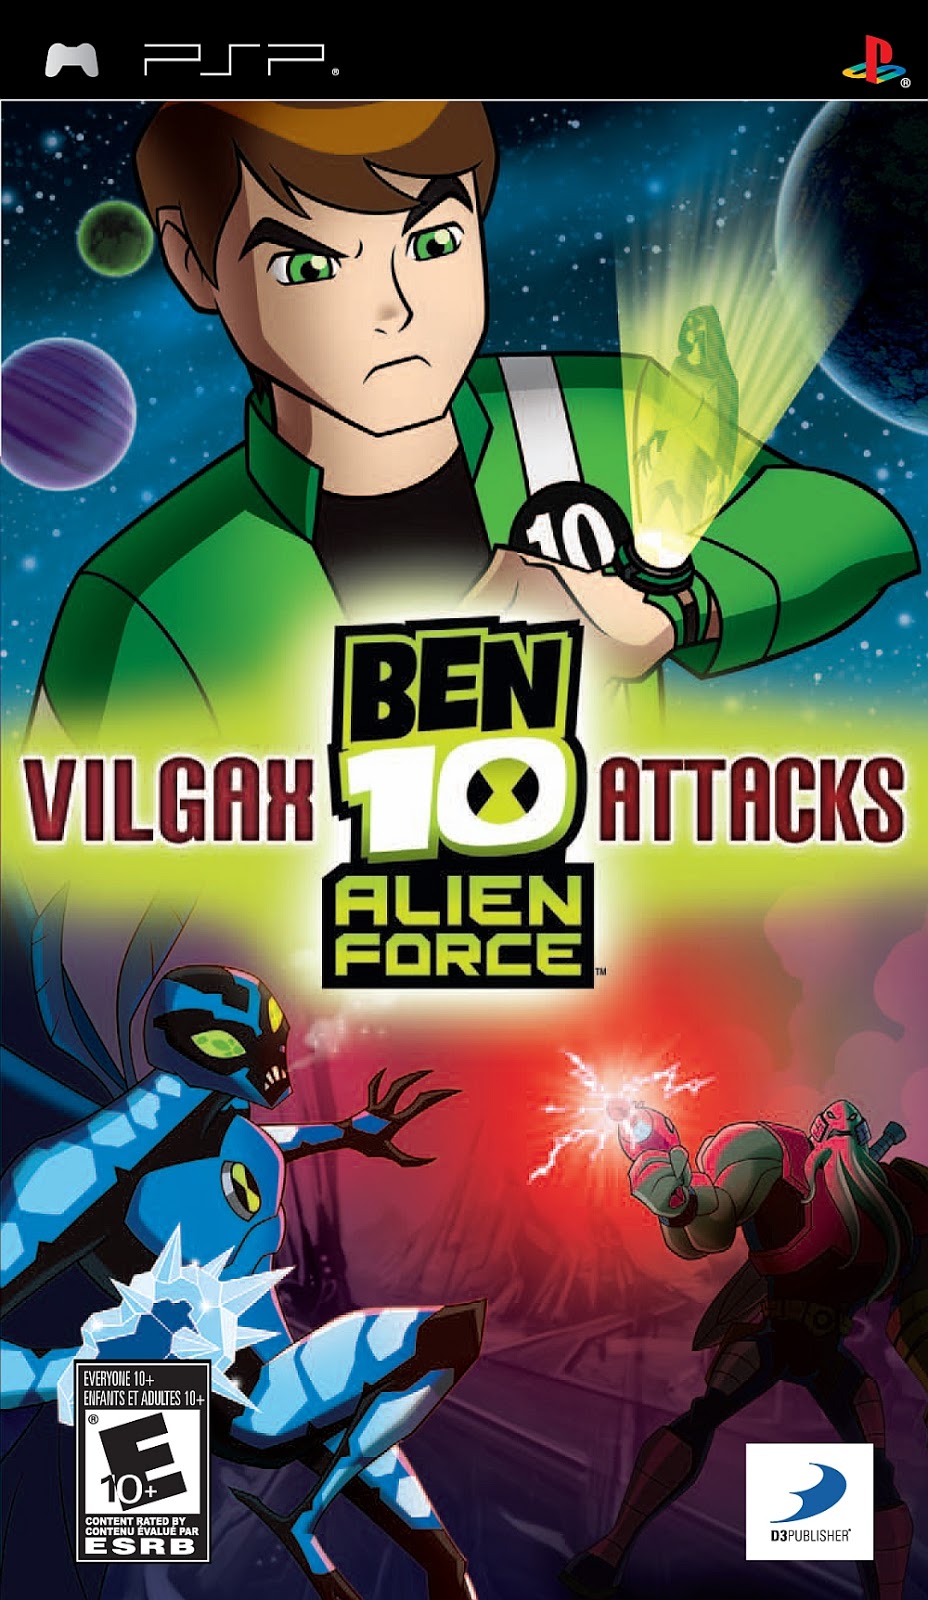 ben 10 alien force vilgax attacks psp screenshot